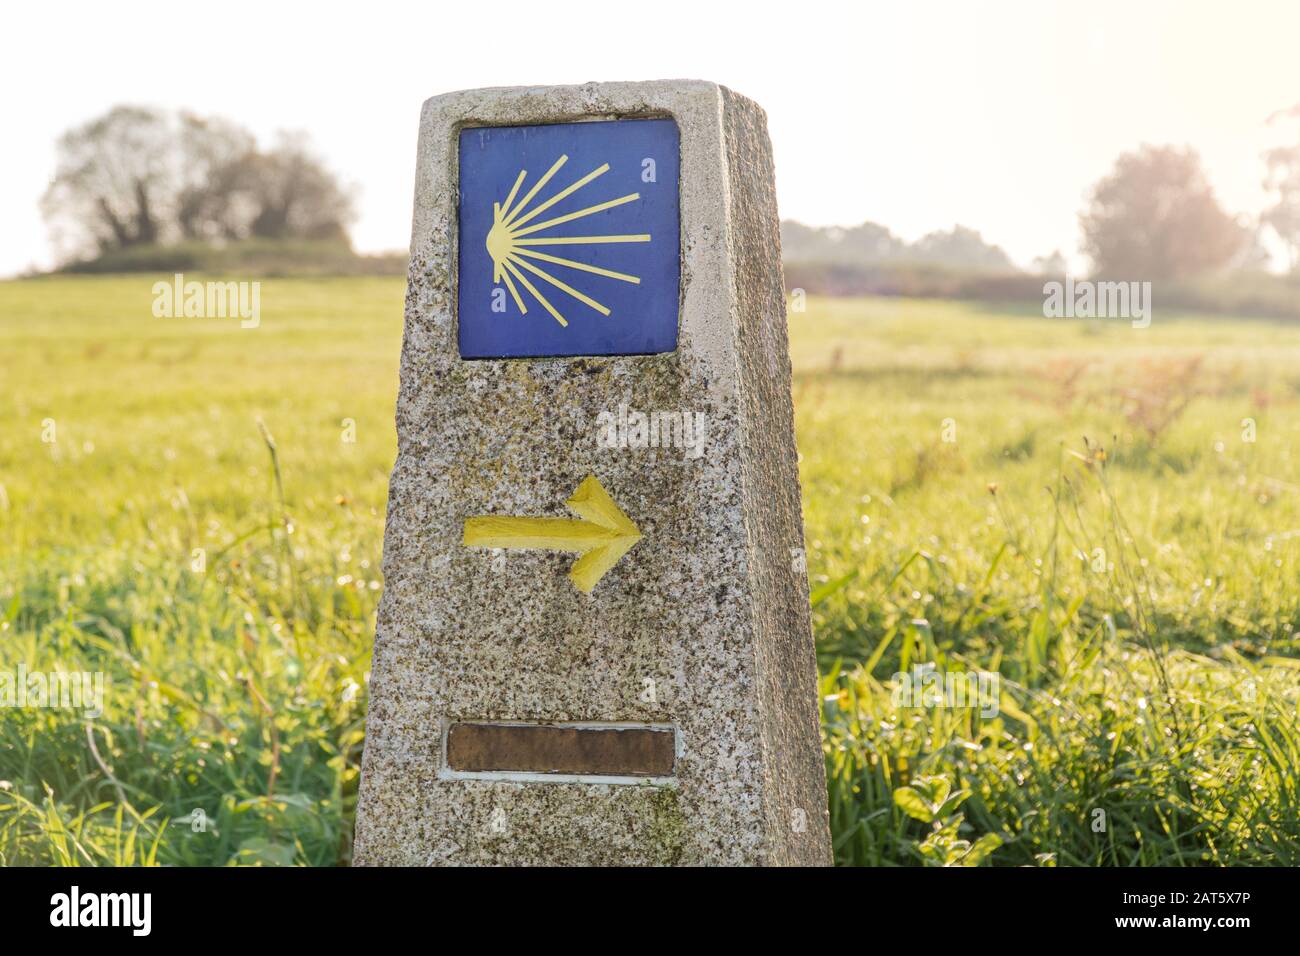 Camino de Santiago sign with green grass background. Pilgrimage sign to Santiago de Compostela Stock Photo